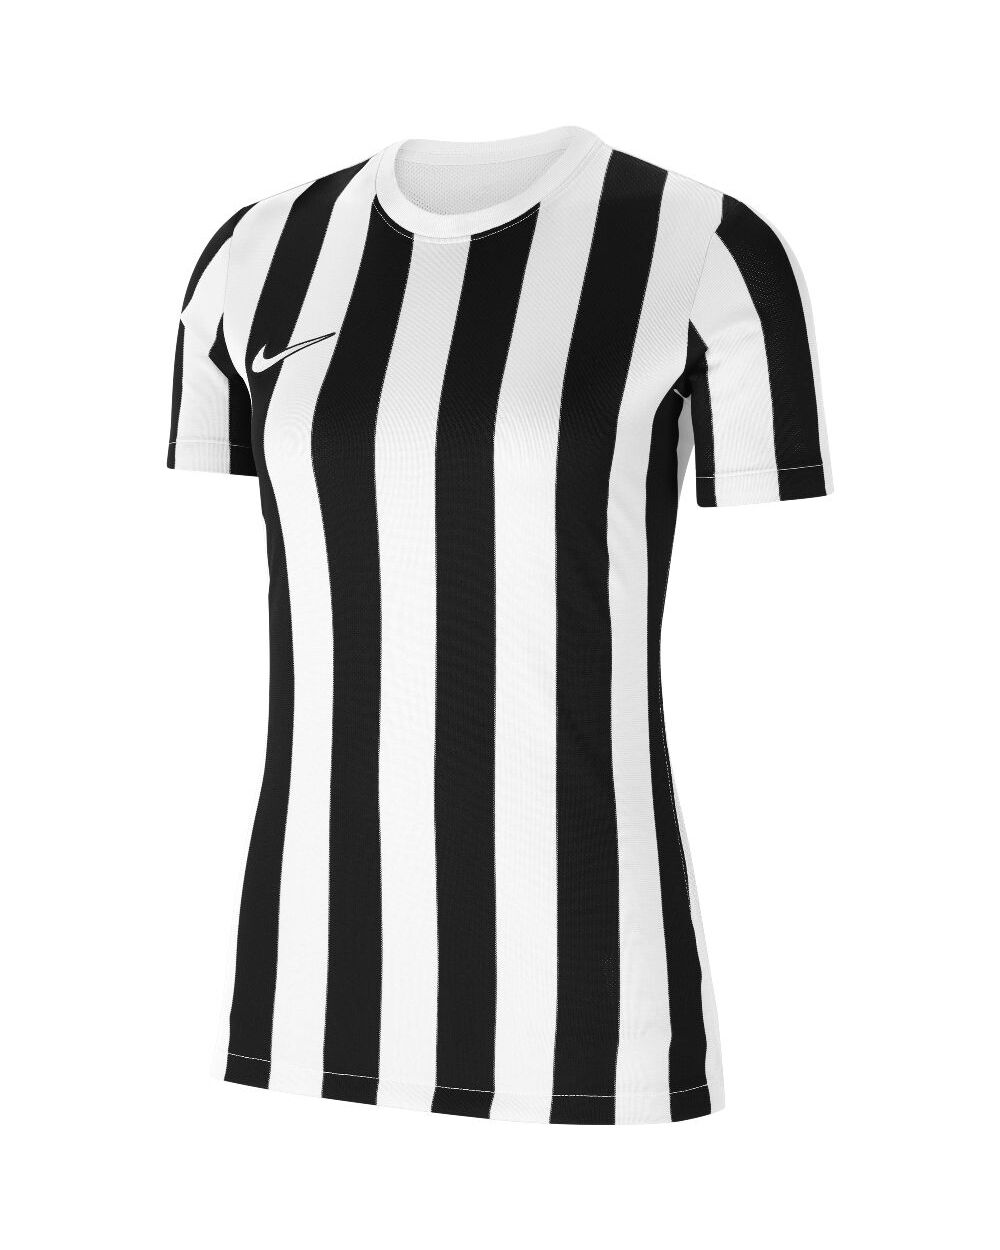 Camiseta Nike Striped Division IV Blanco y Negro para Mujeres - CW3816-100